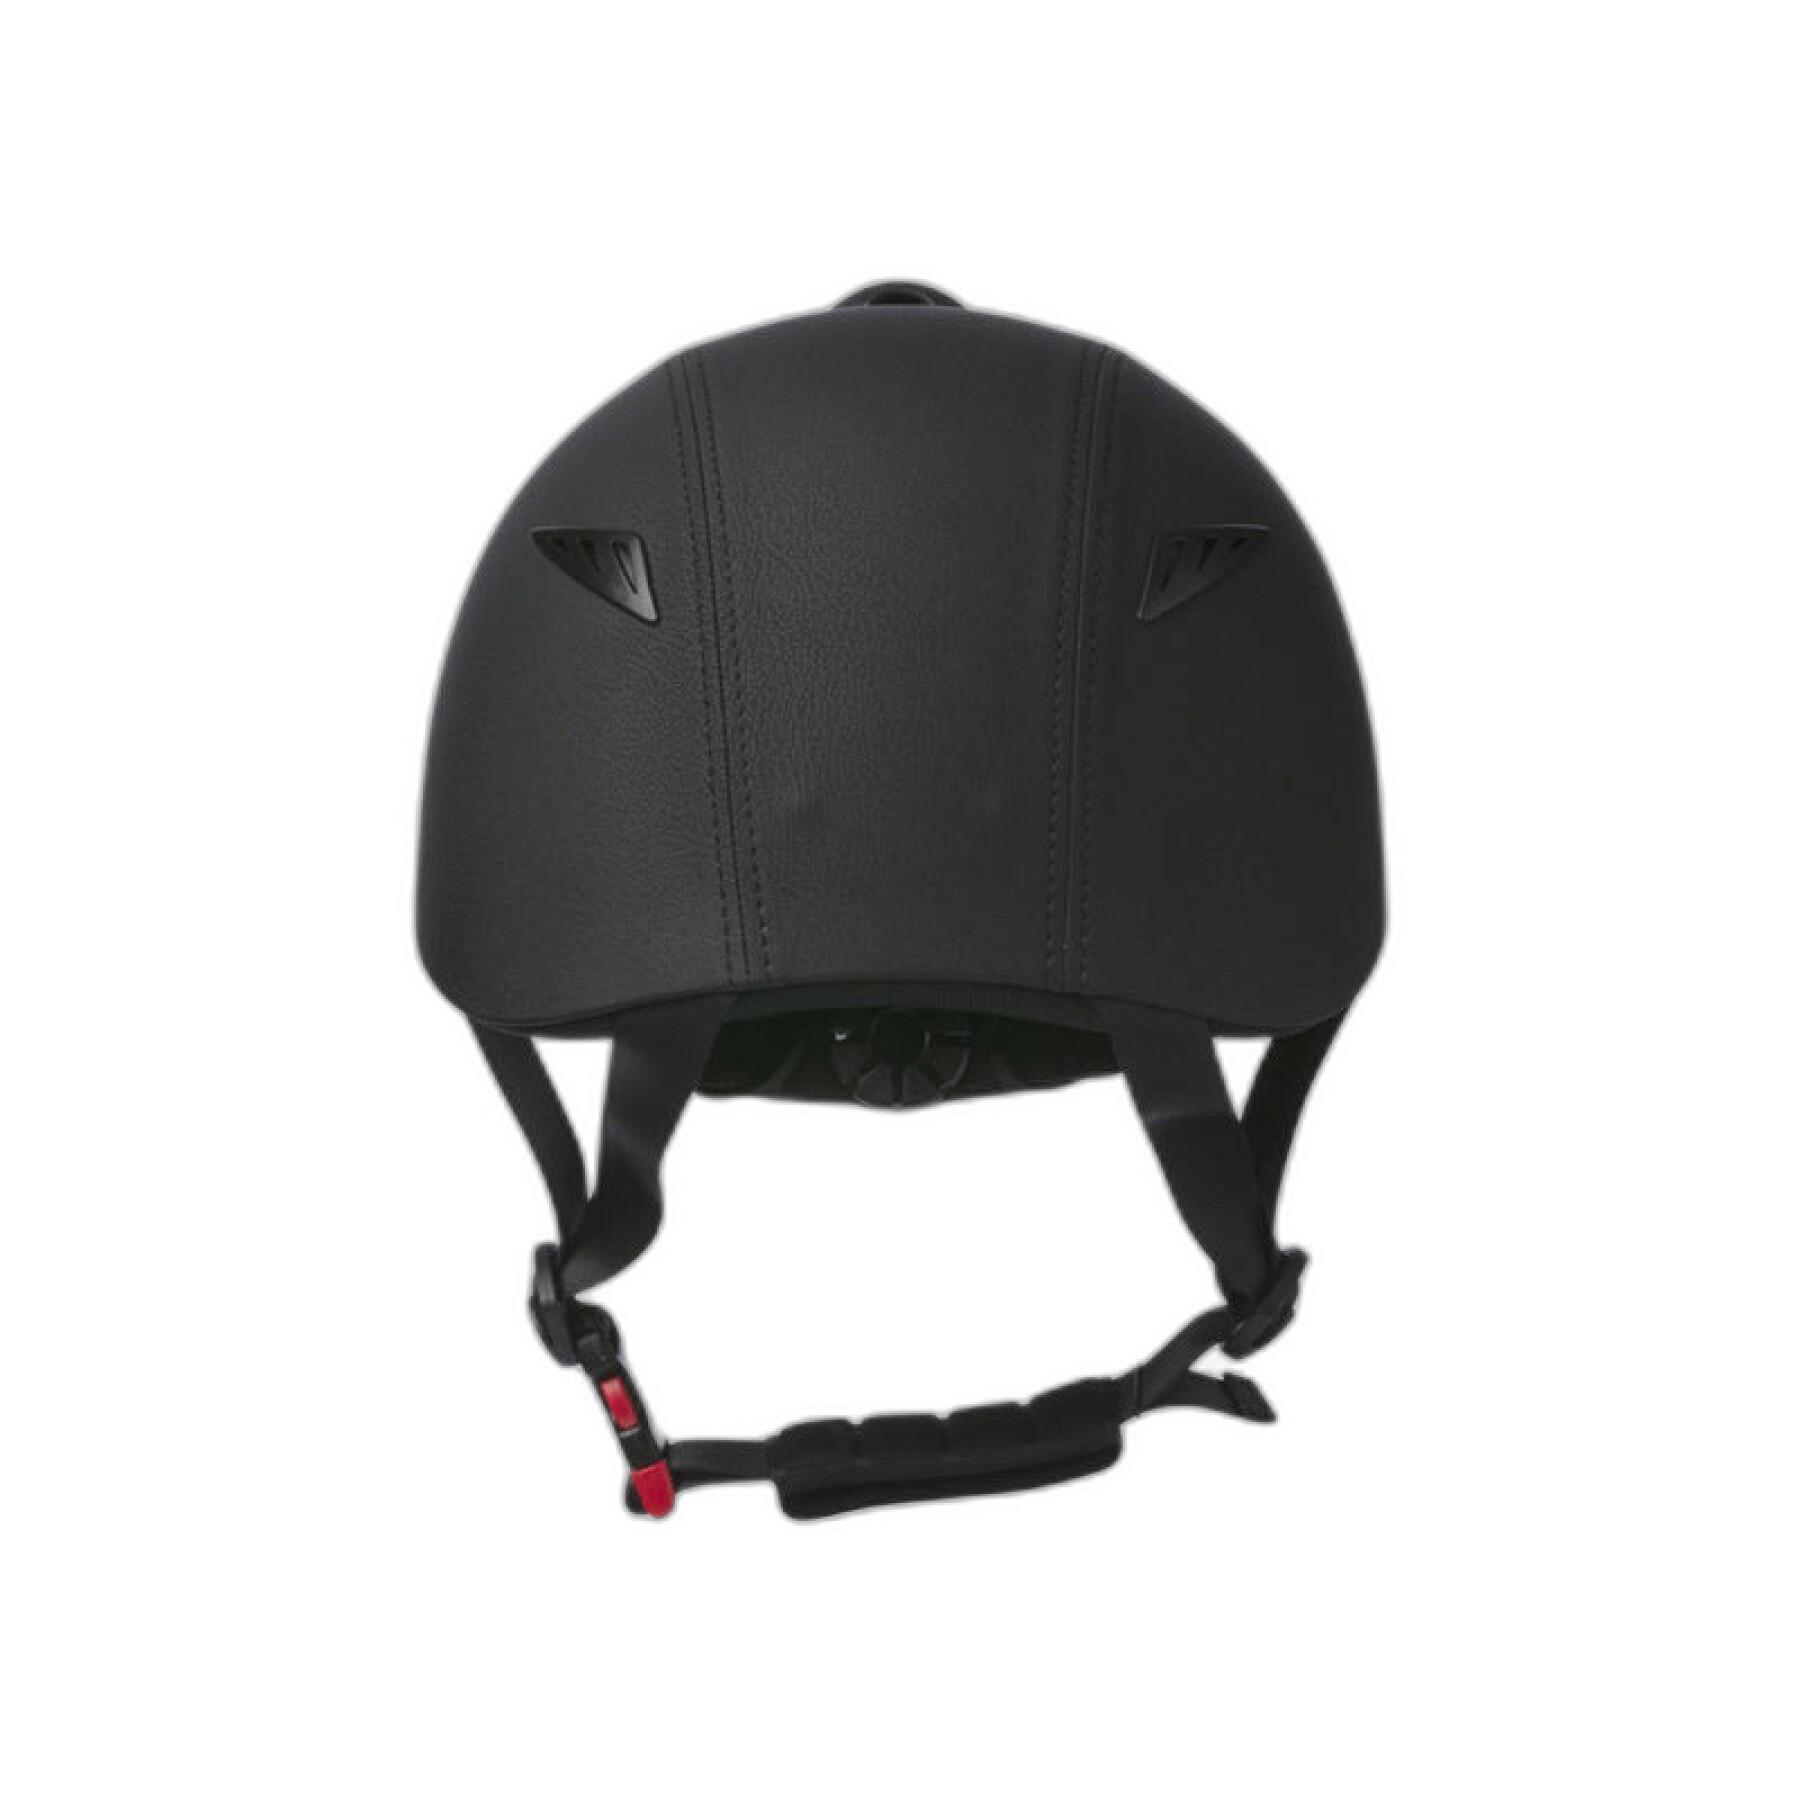 Adjustable riding helmet Choplin Premium grainé